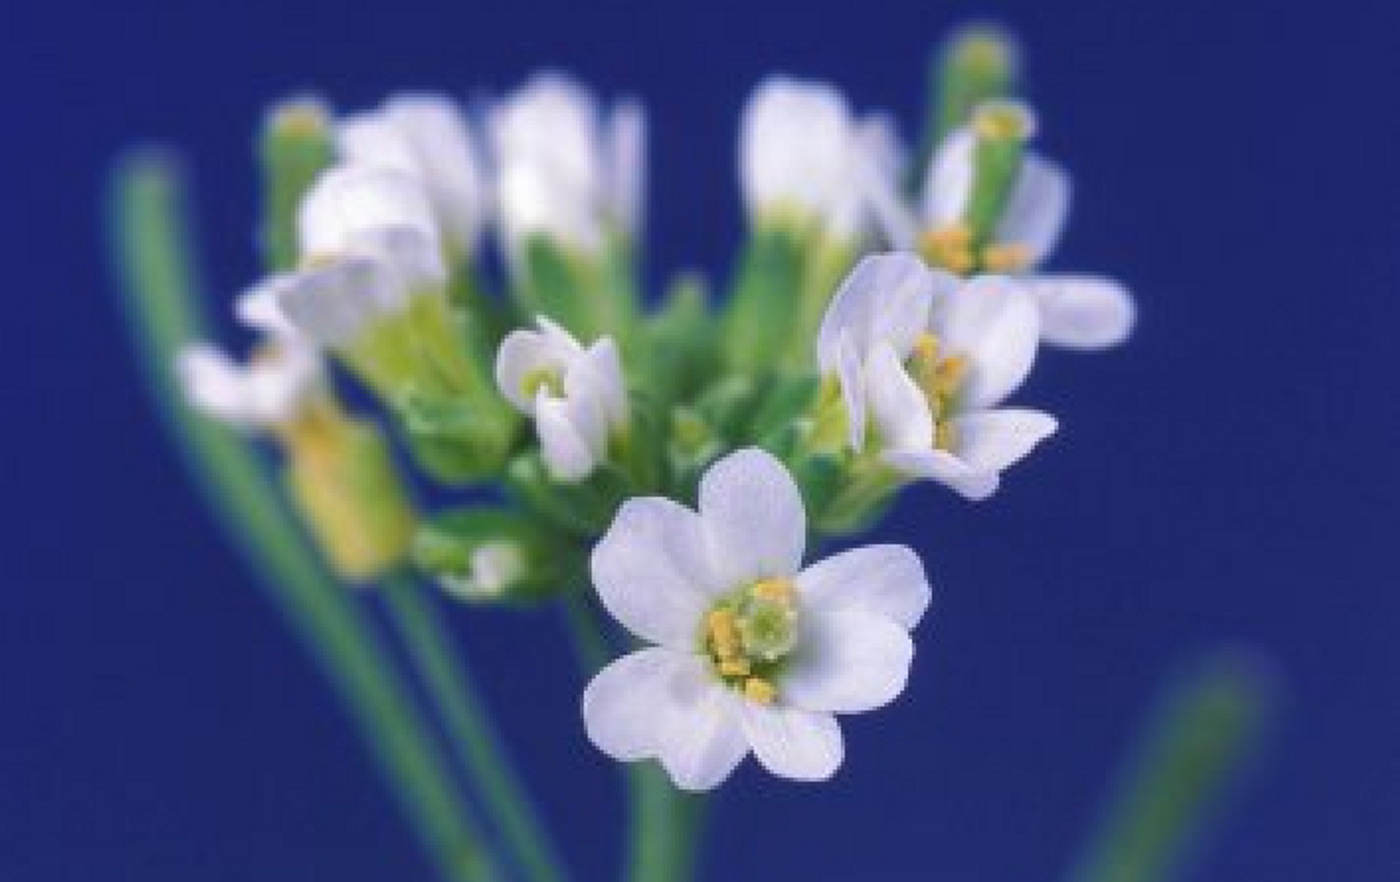 Arabidopsis thalania flower / Credit: Pixnio